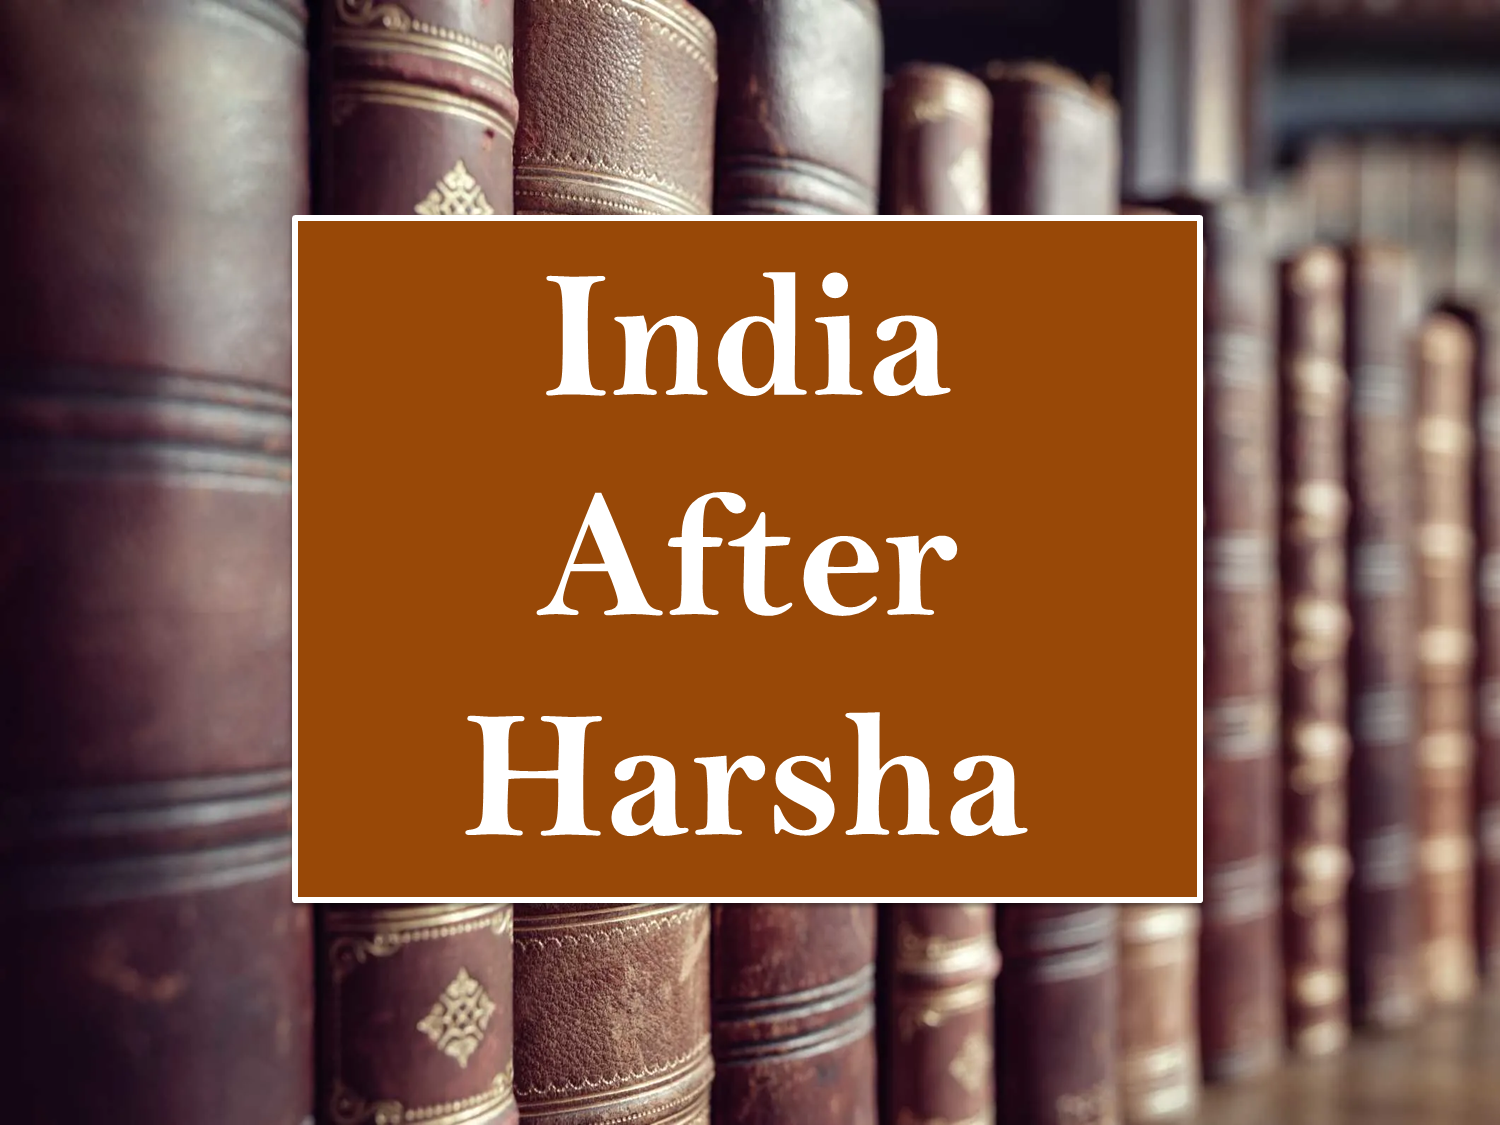 India After Harsha